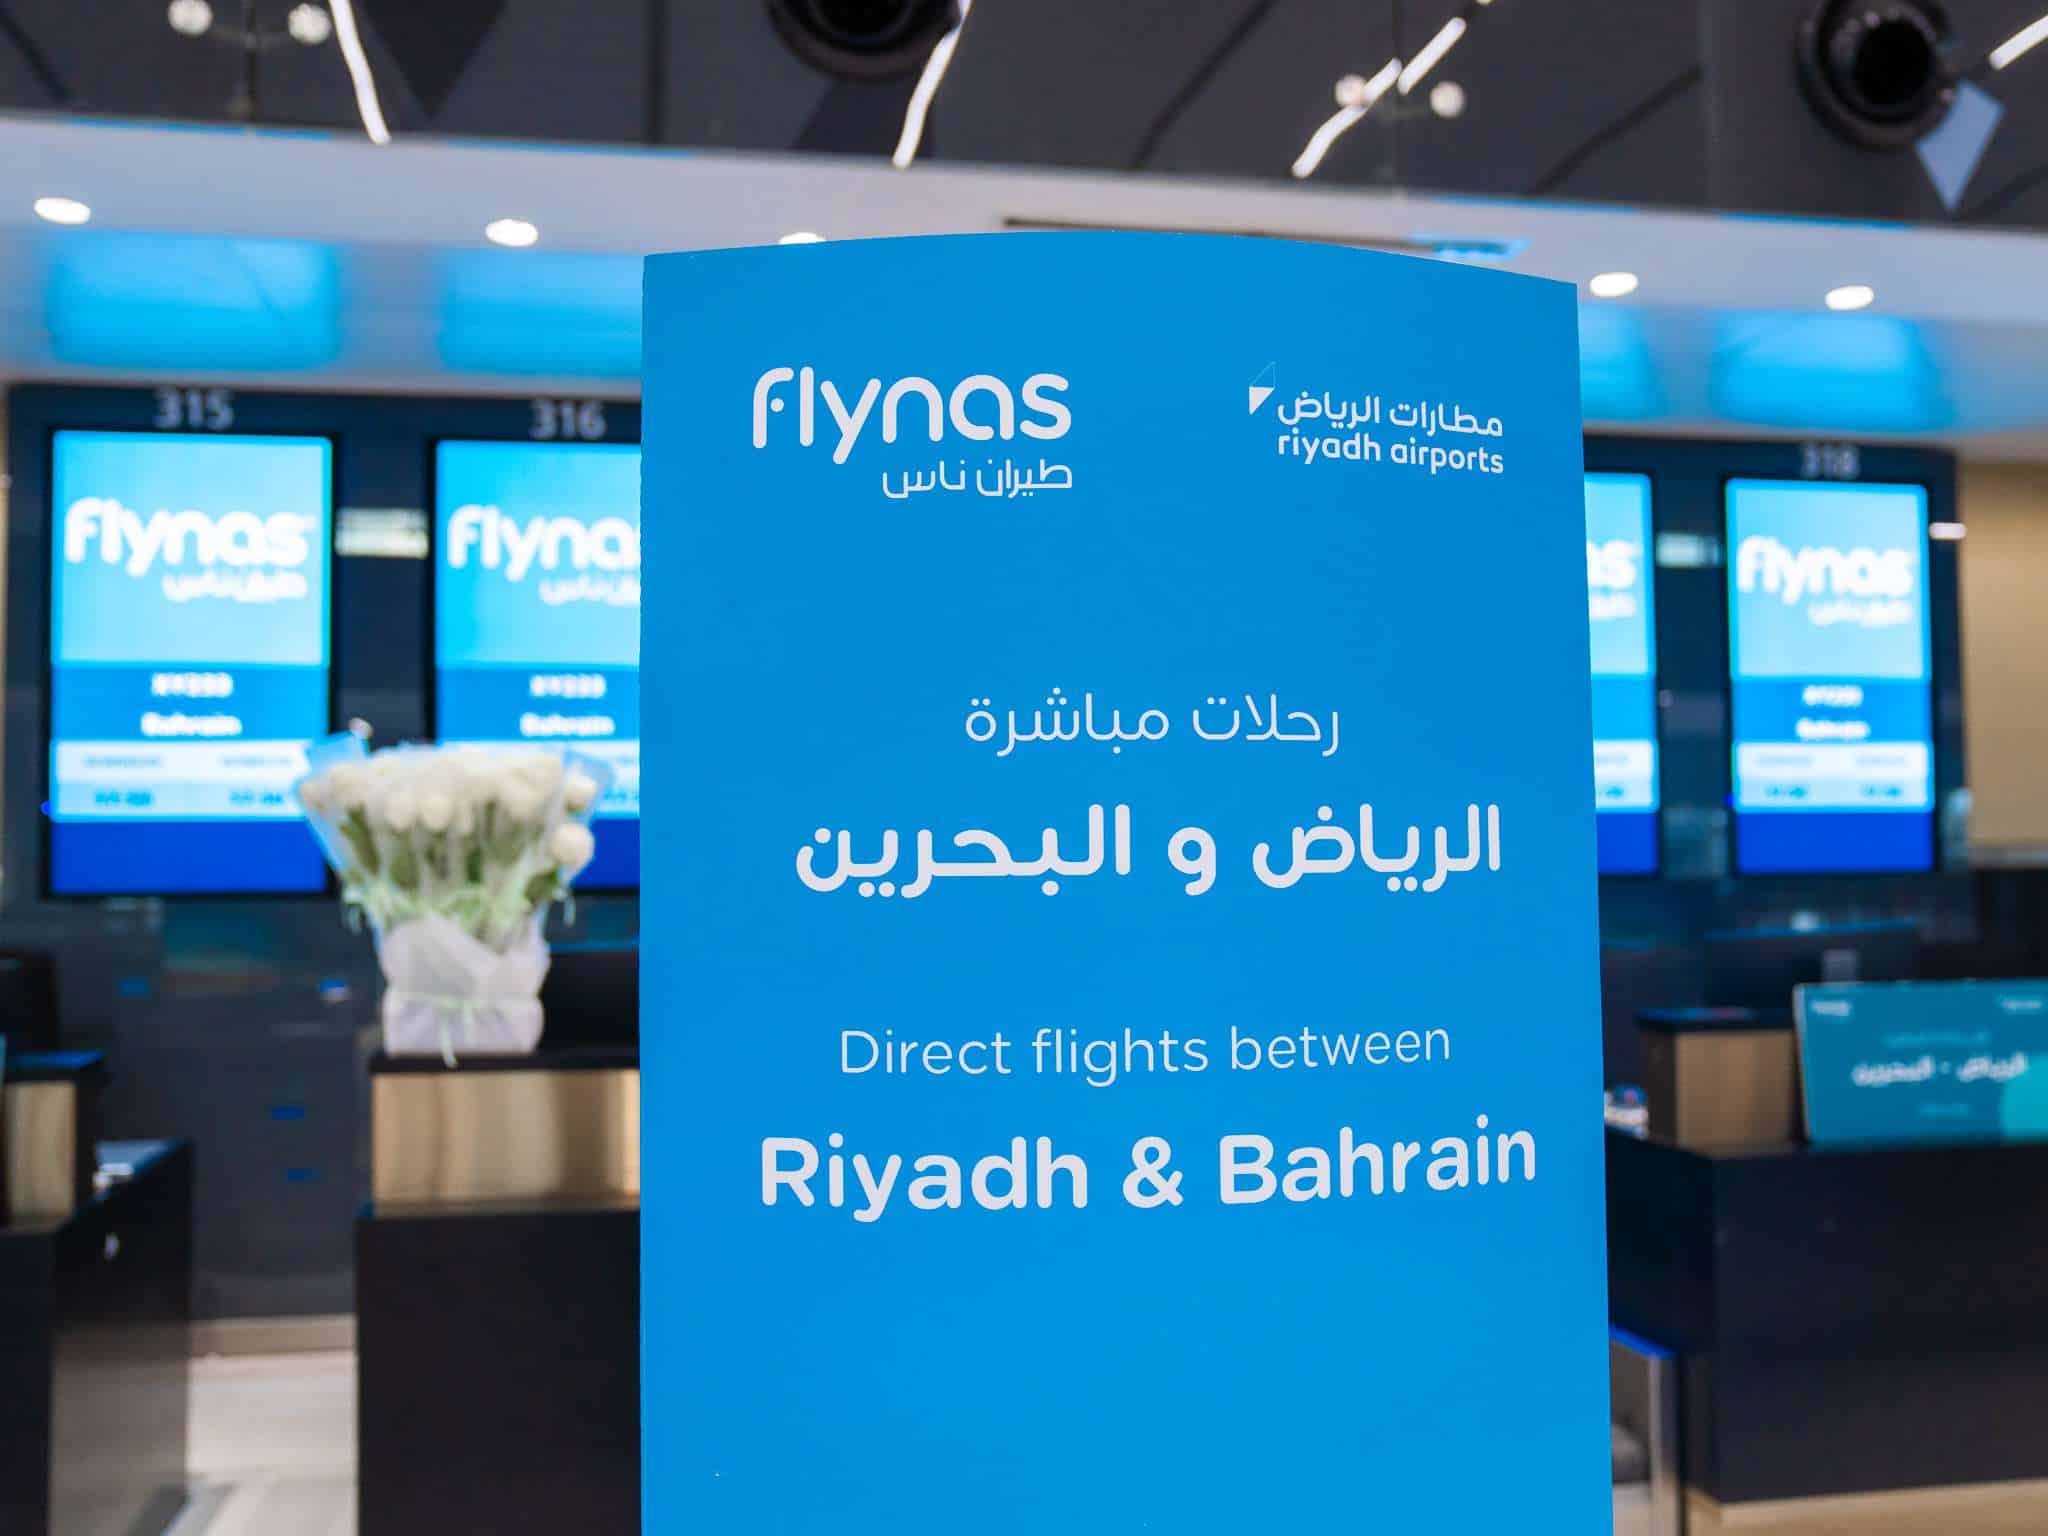 flynas Launches First Daily Flights Between Riyadh & Bahrain